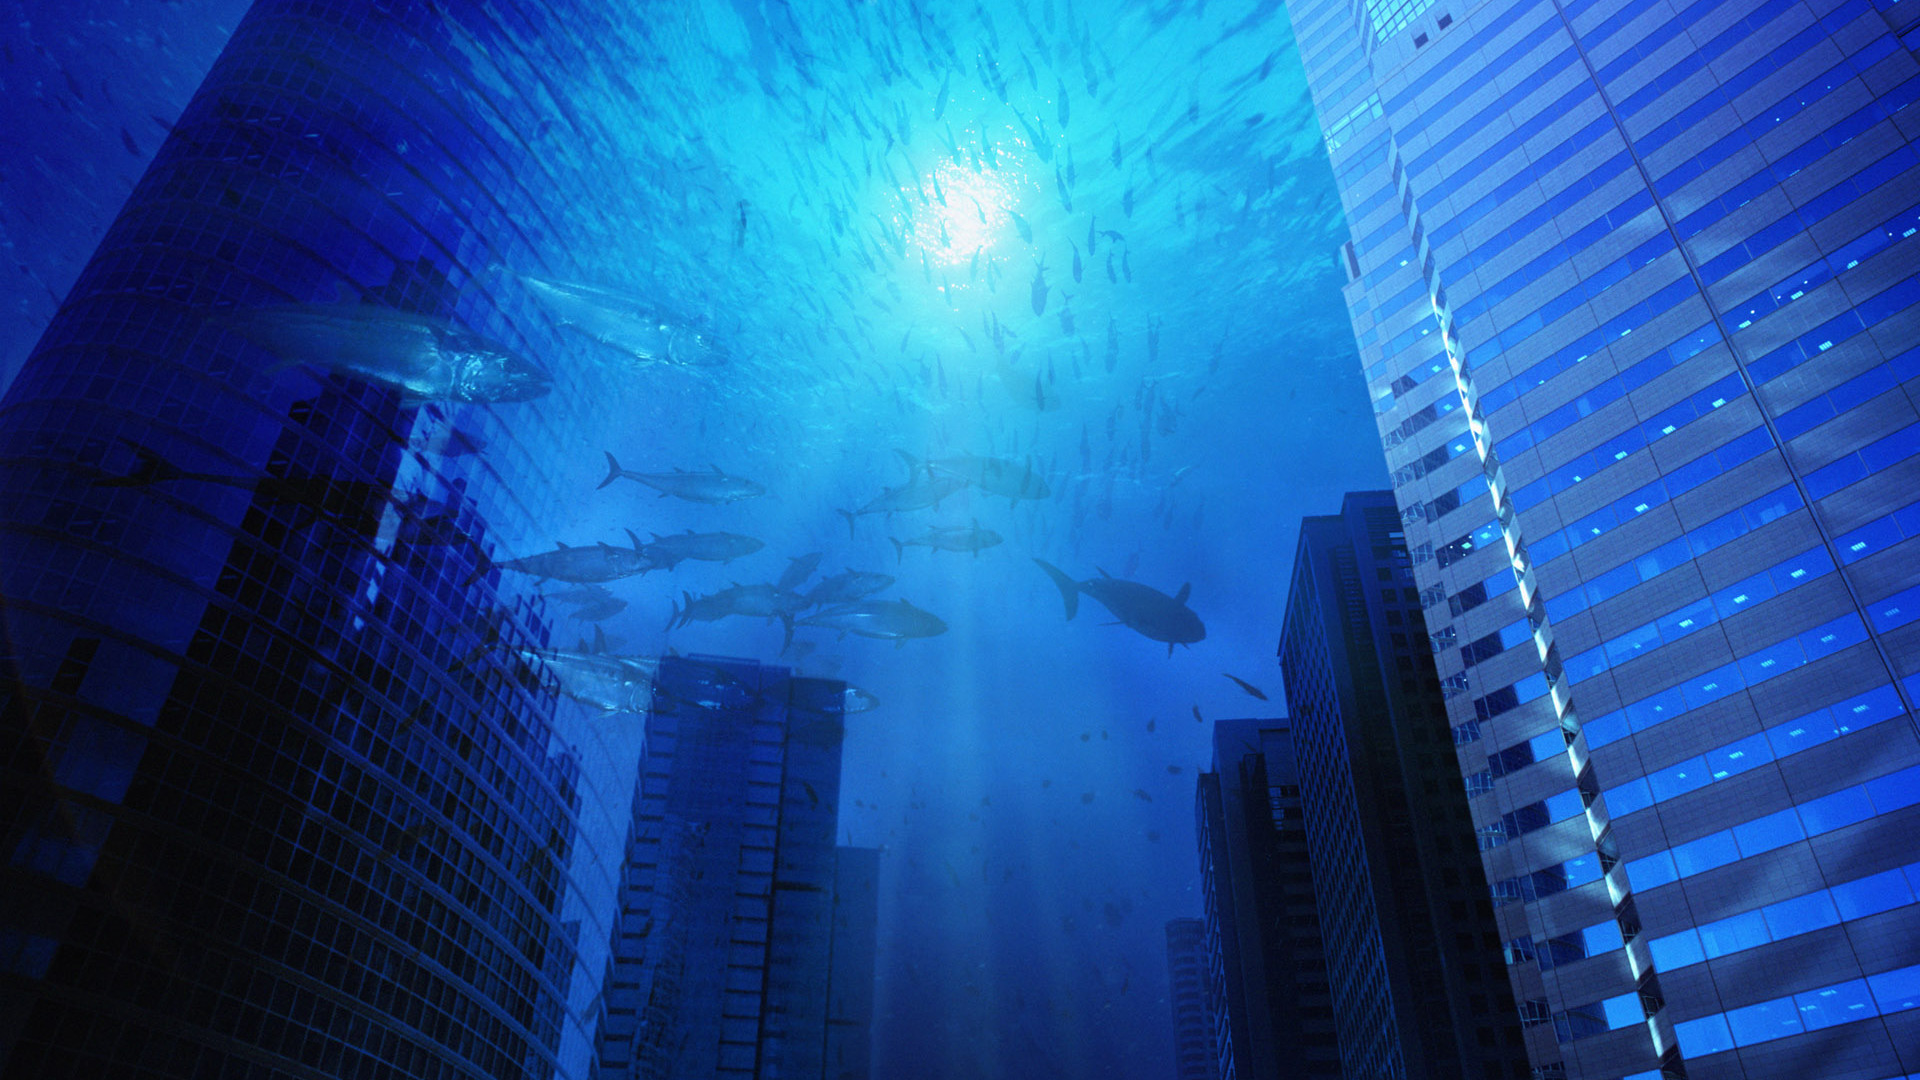 HD Wallpaper Underwater City Background For Your Desktop